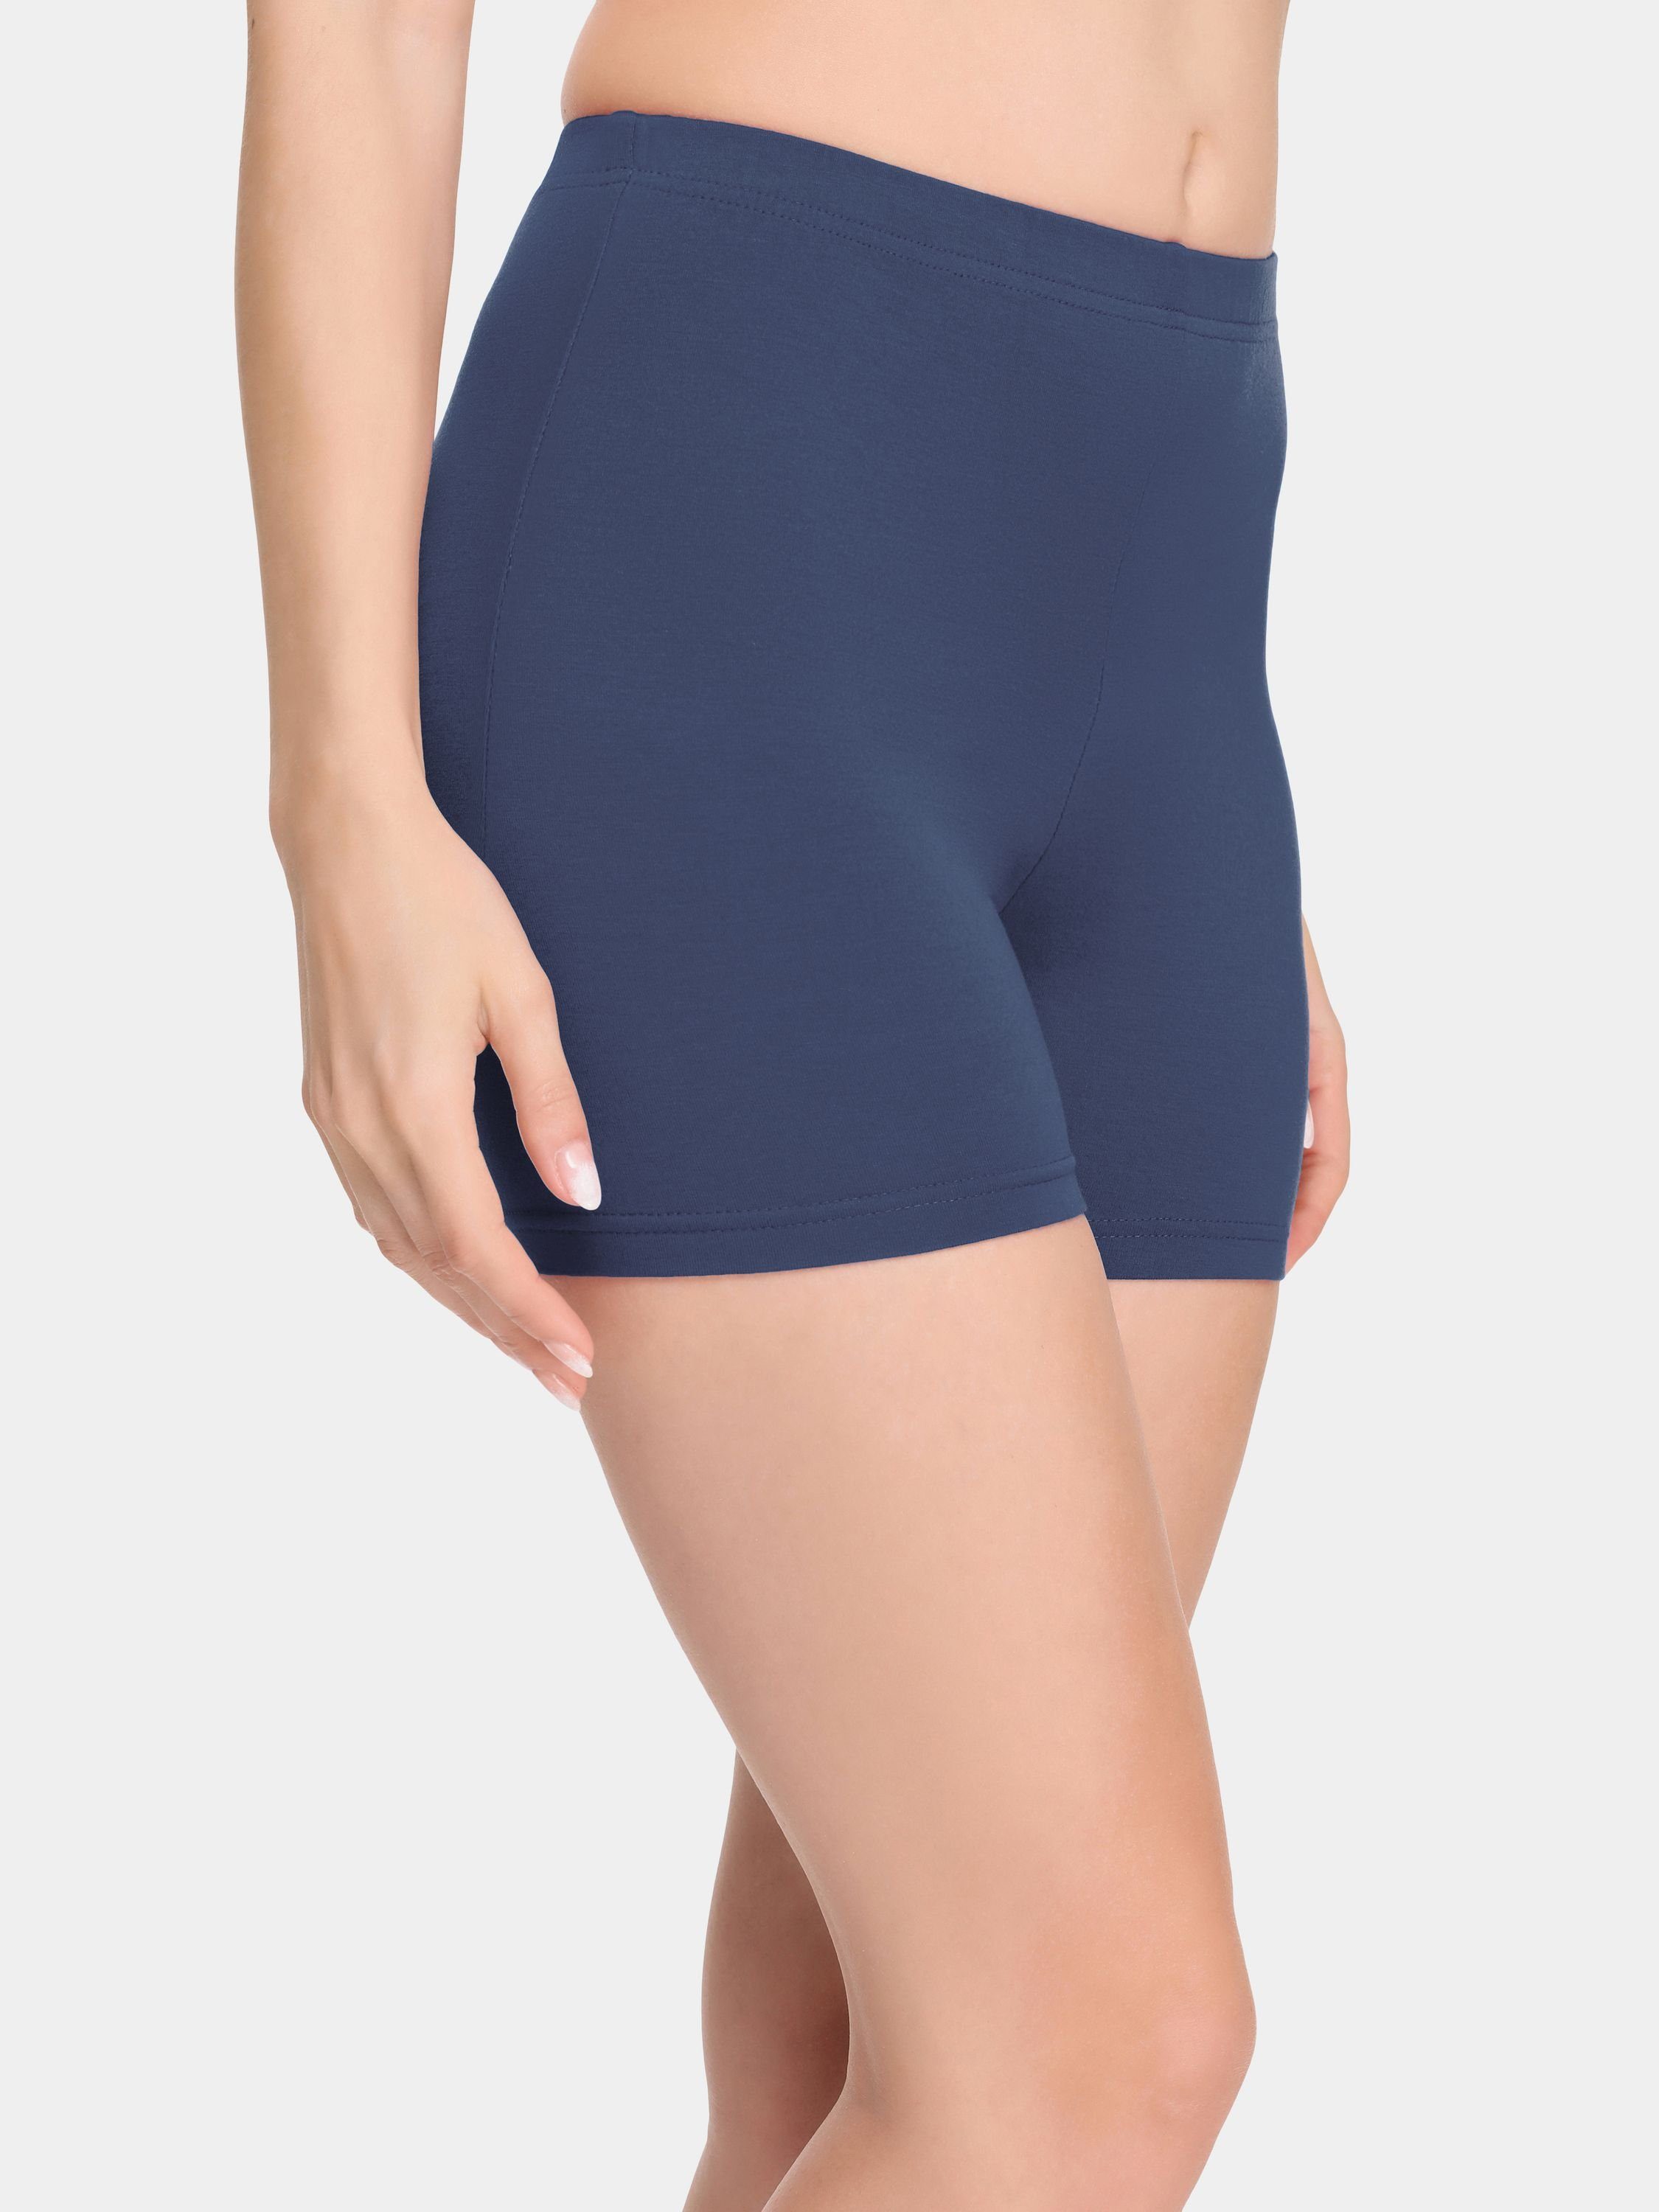 Jeans Damen Boxershorts Shorts elastischer Radlerhose Unterhose Merry (1-tlg) Leggings MS10-392 Hotpants Style Bund